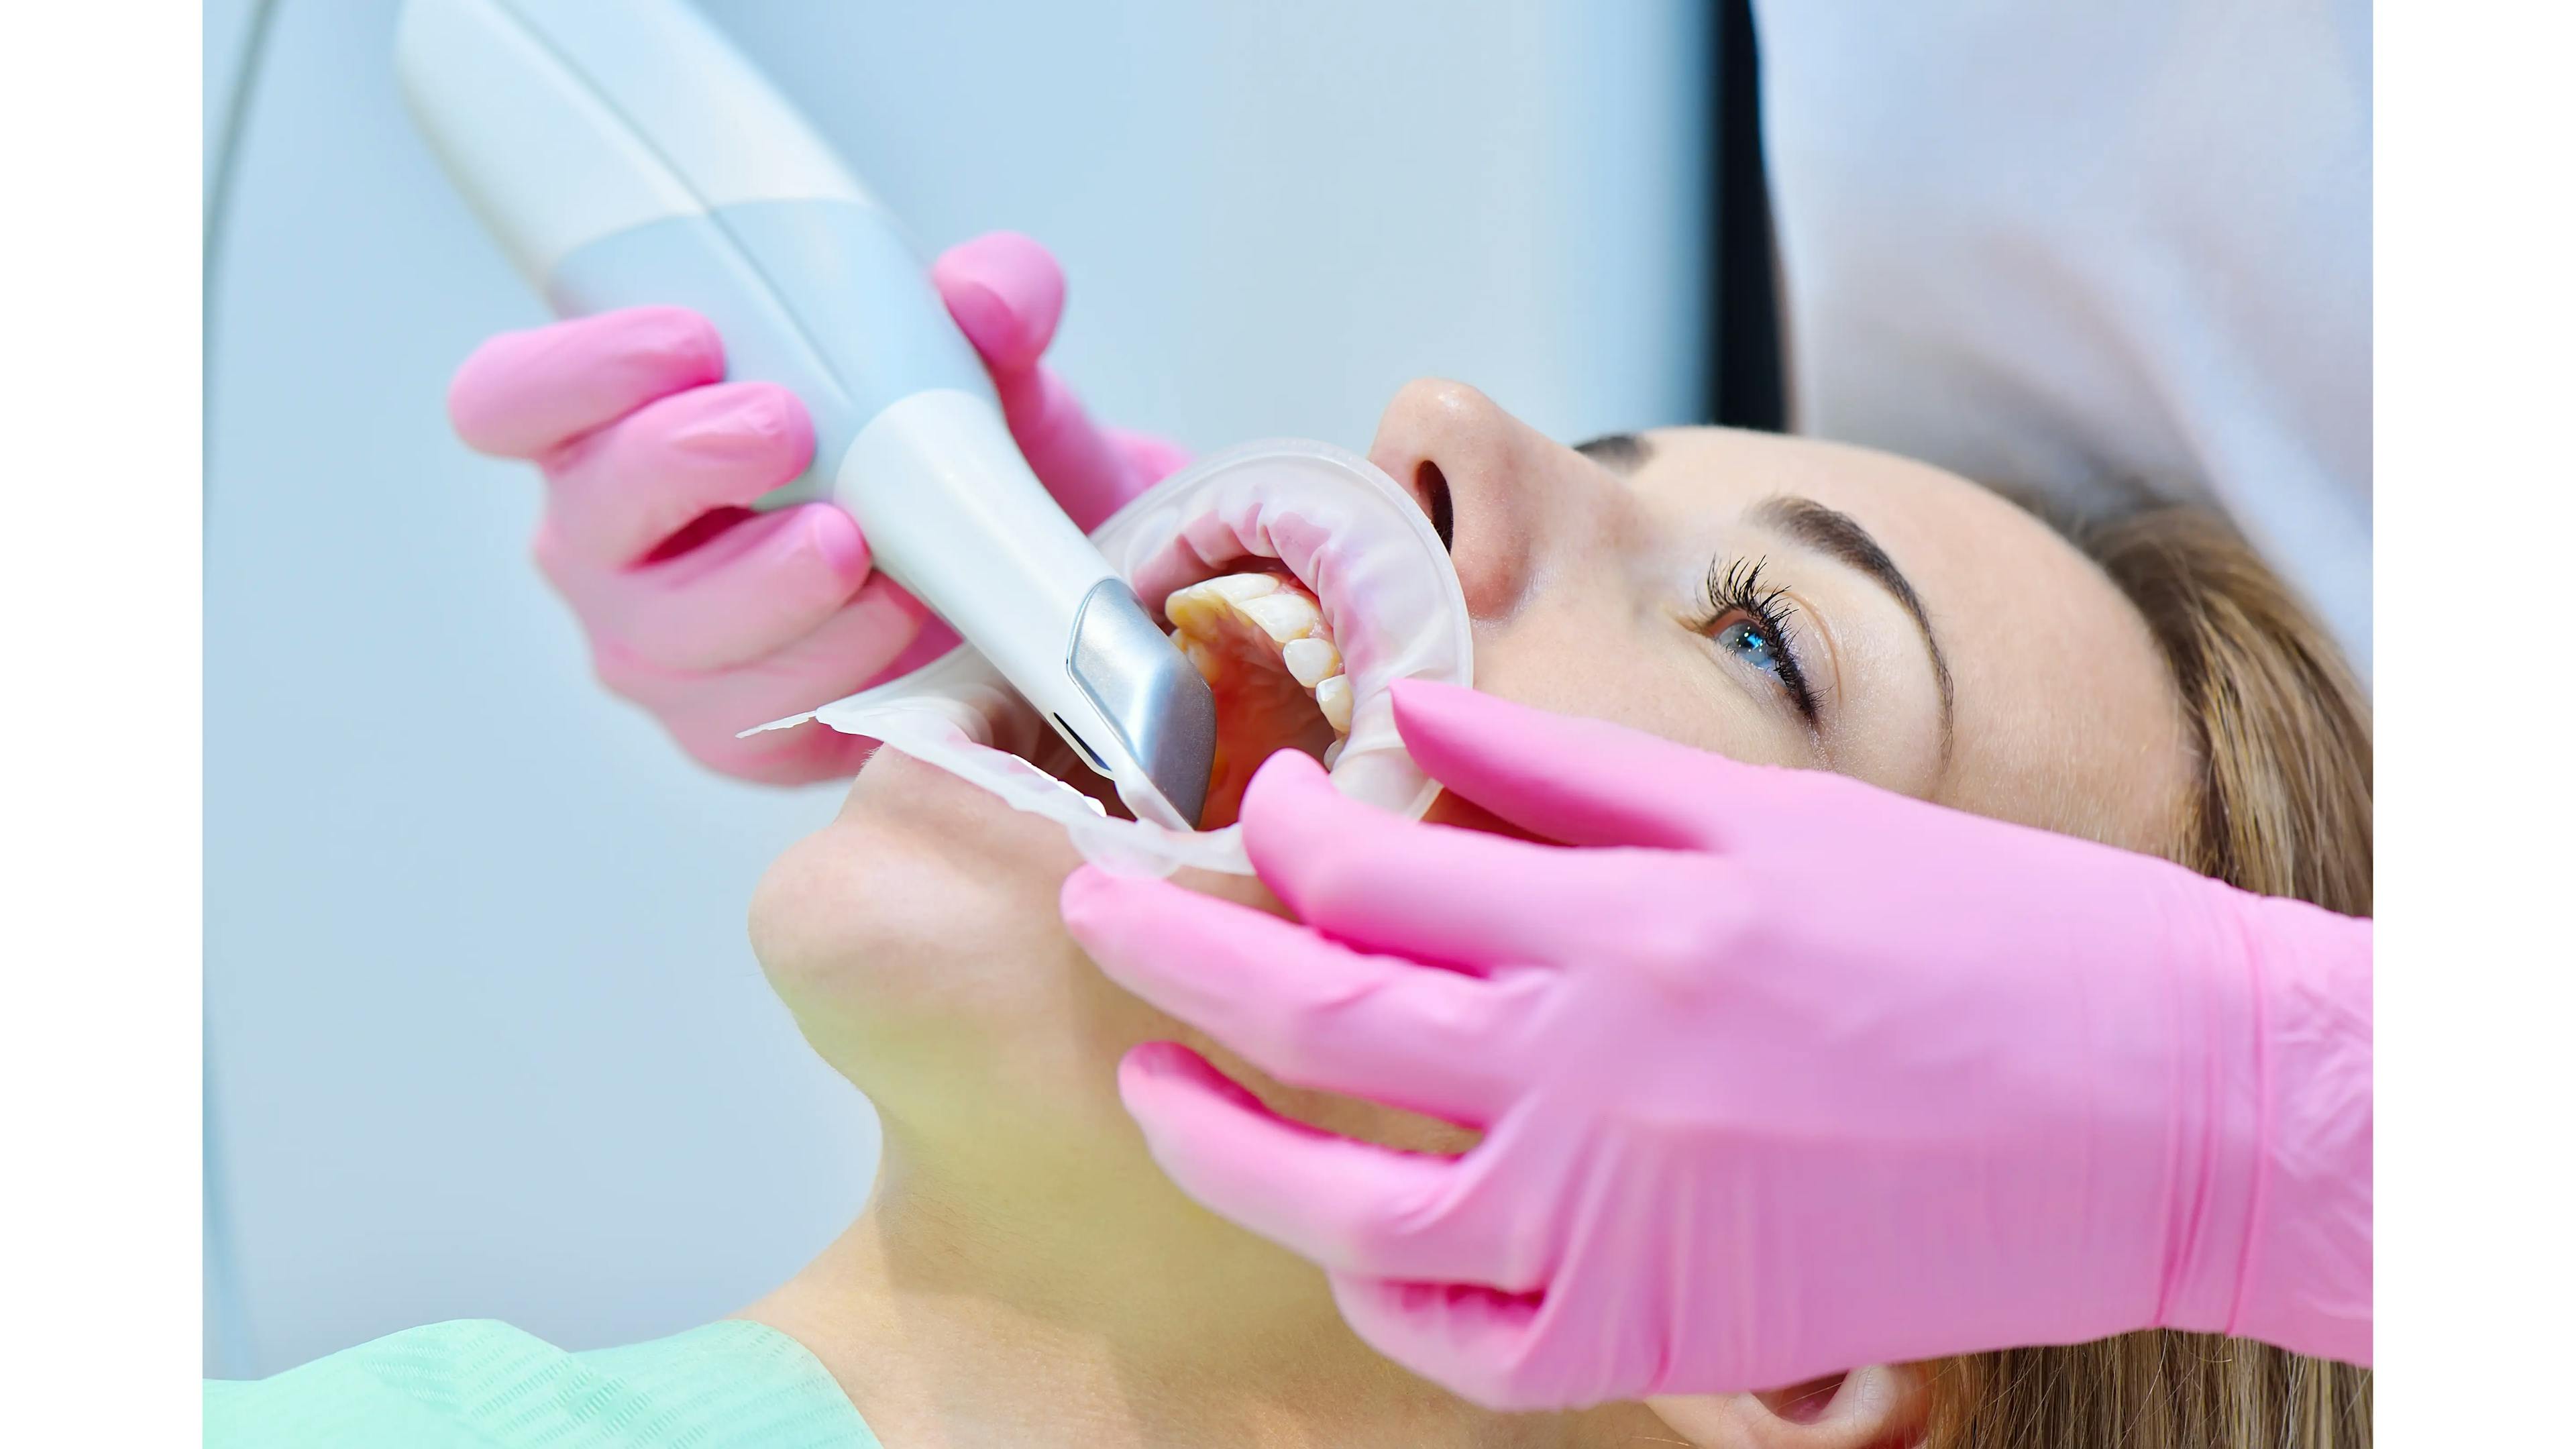 femme en consultation orthodontique 